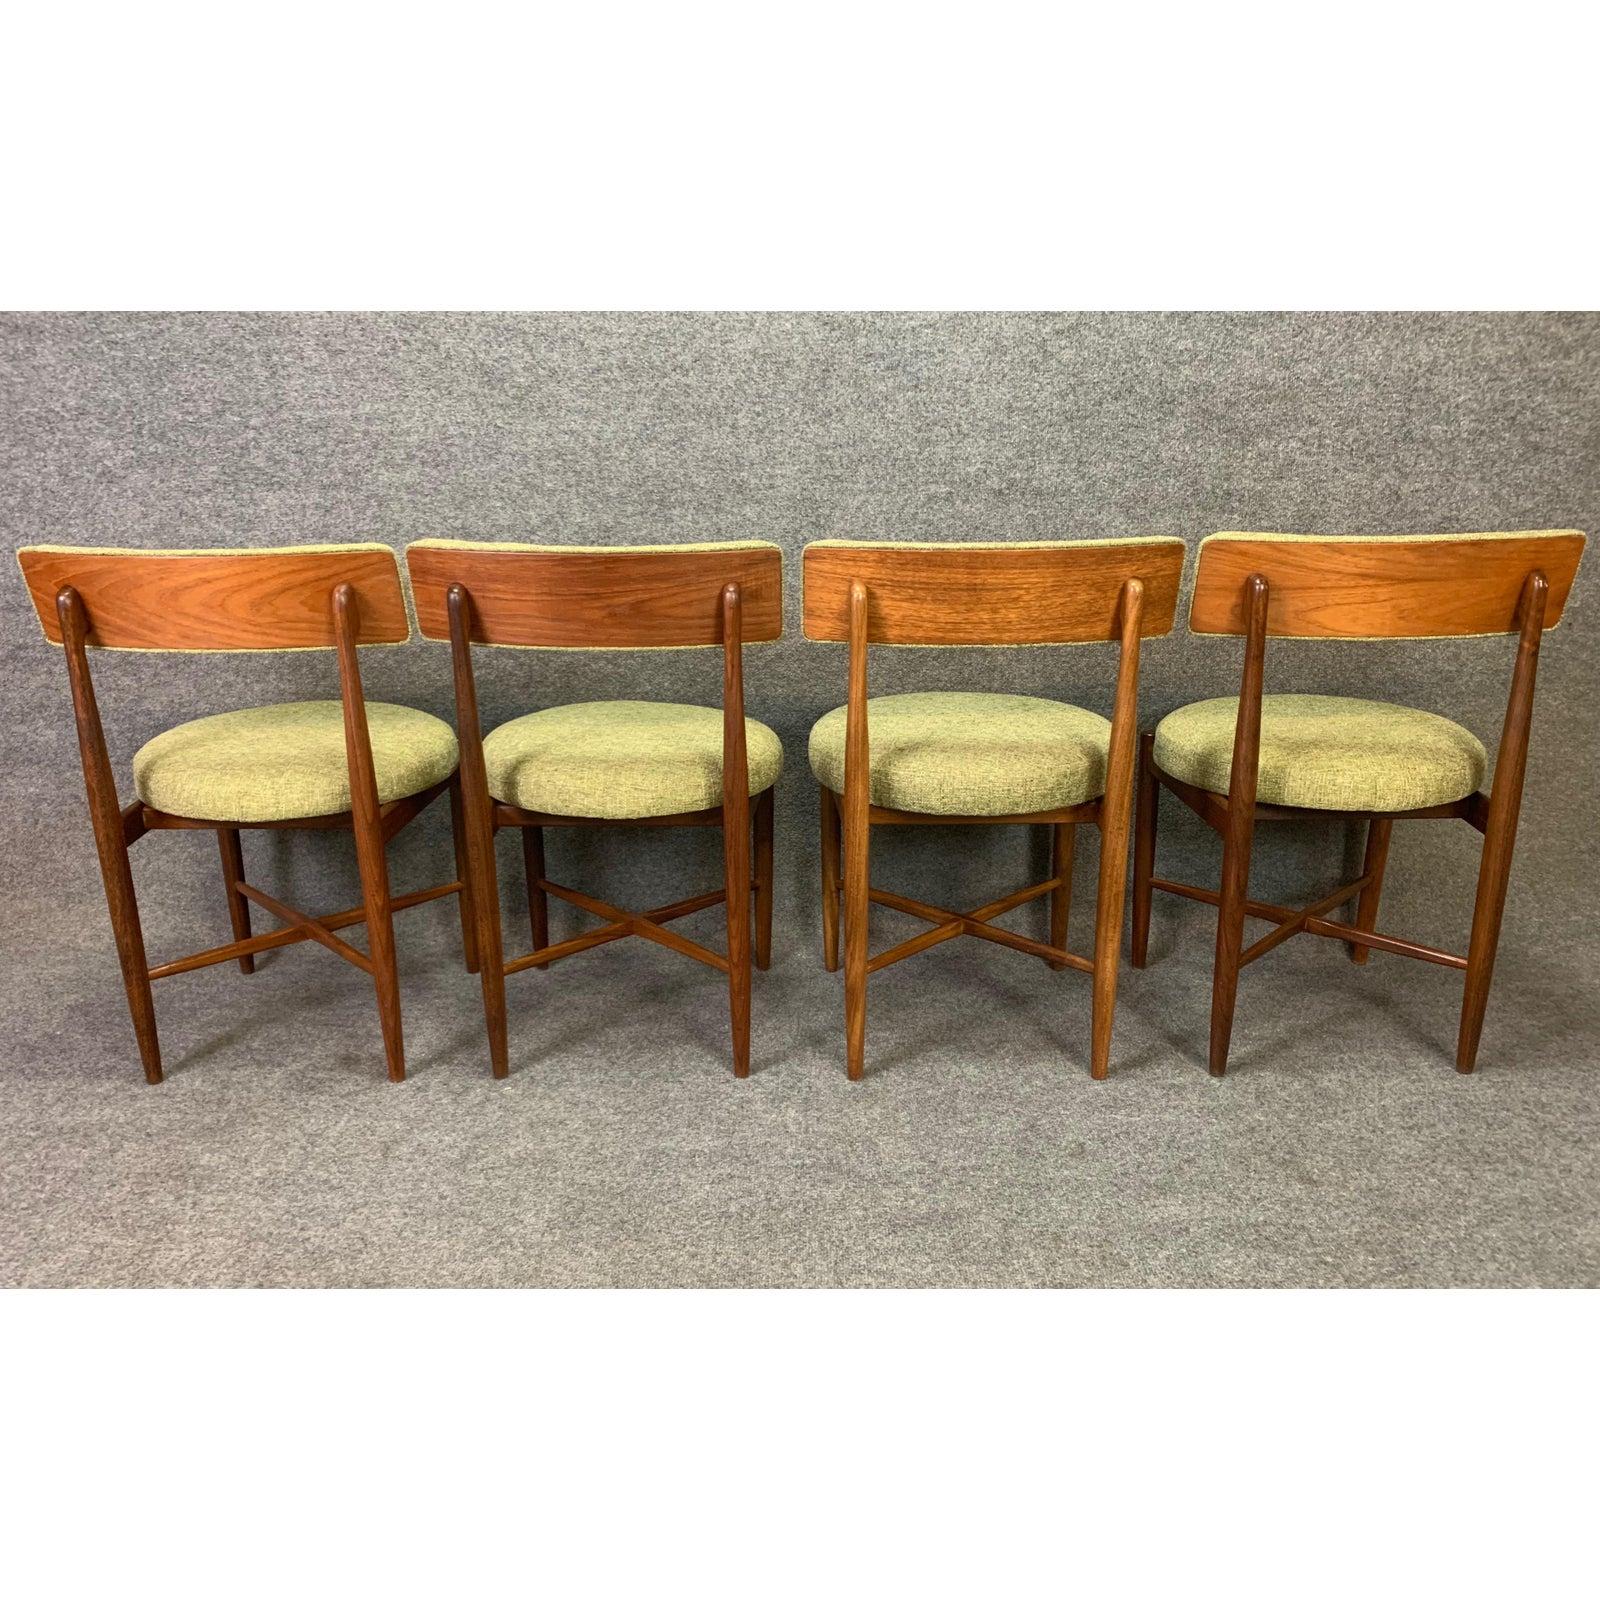 Mid-20th Century Set of Eight Vintage British Mid-Century Modern Teak Dining Chairs by G Plan